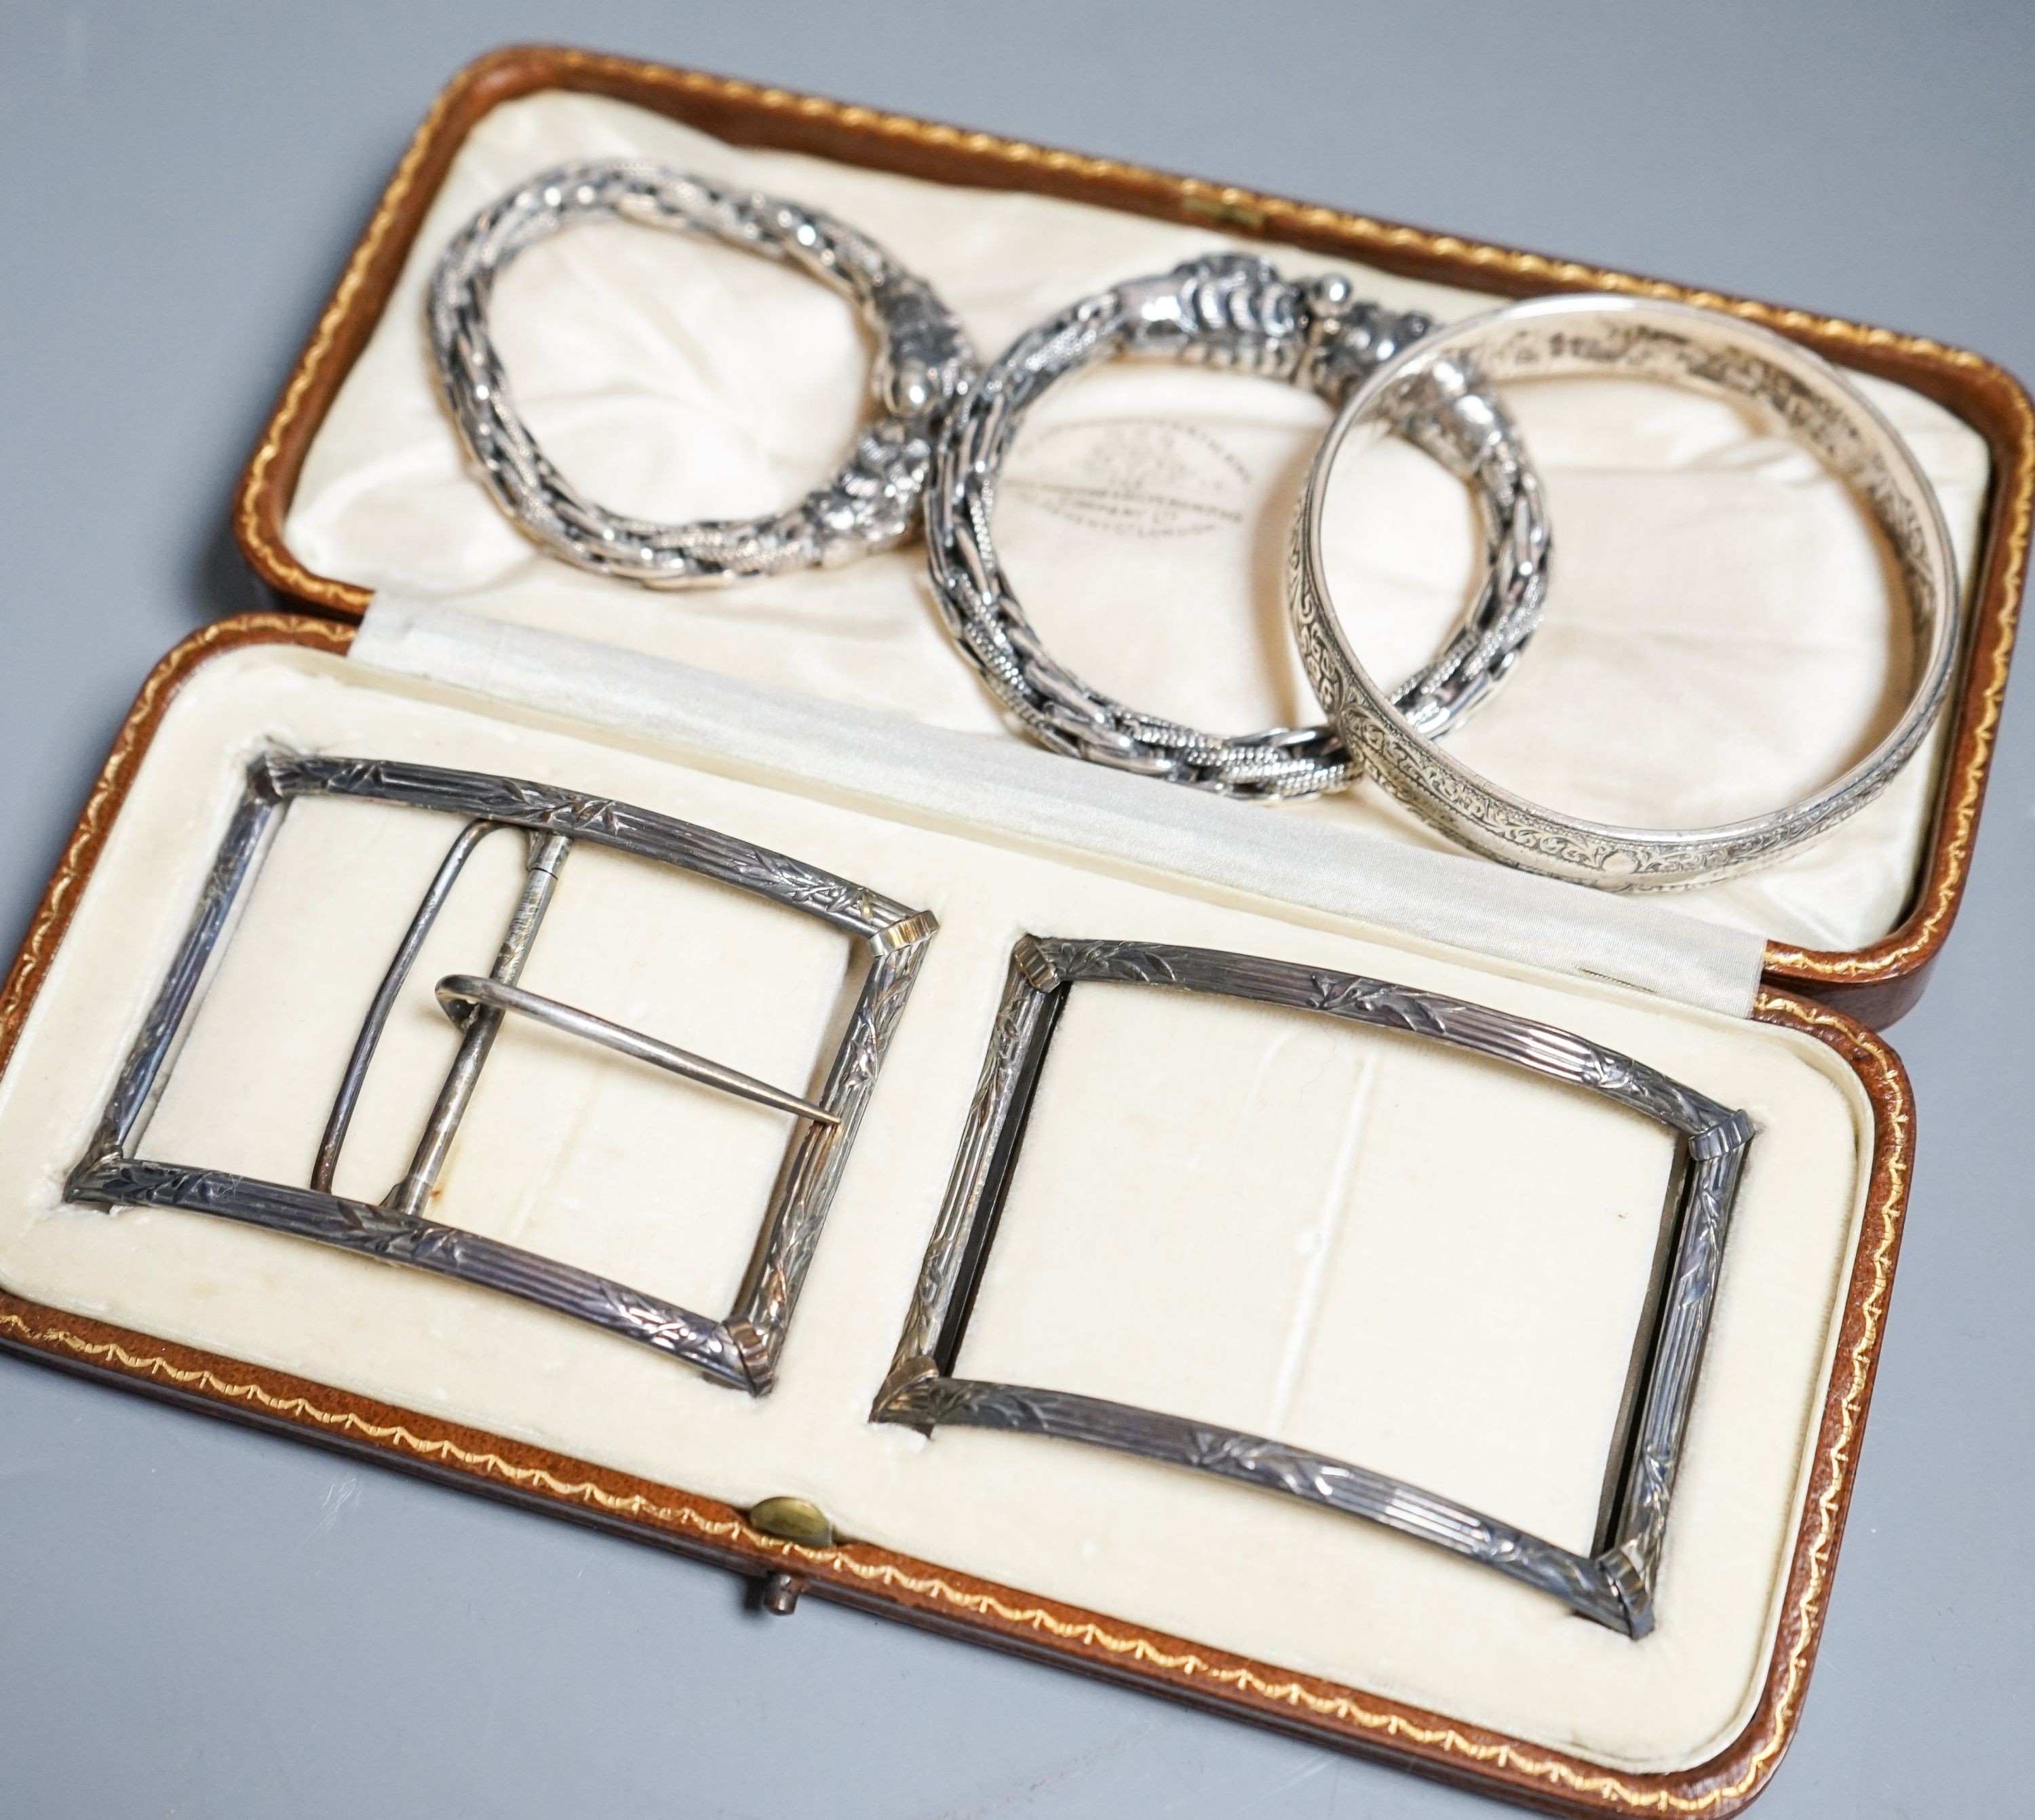 A cased Edwardian belt buckle, Goldsmiths & Silversmiths Co Ltd, London, 1908 and three bangles.